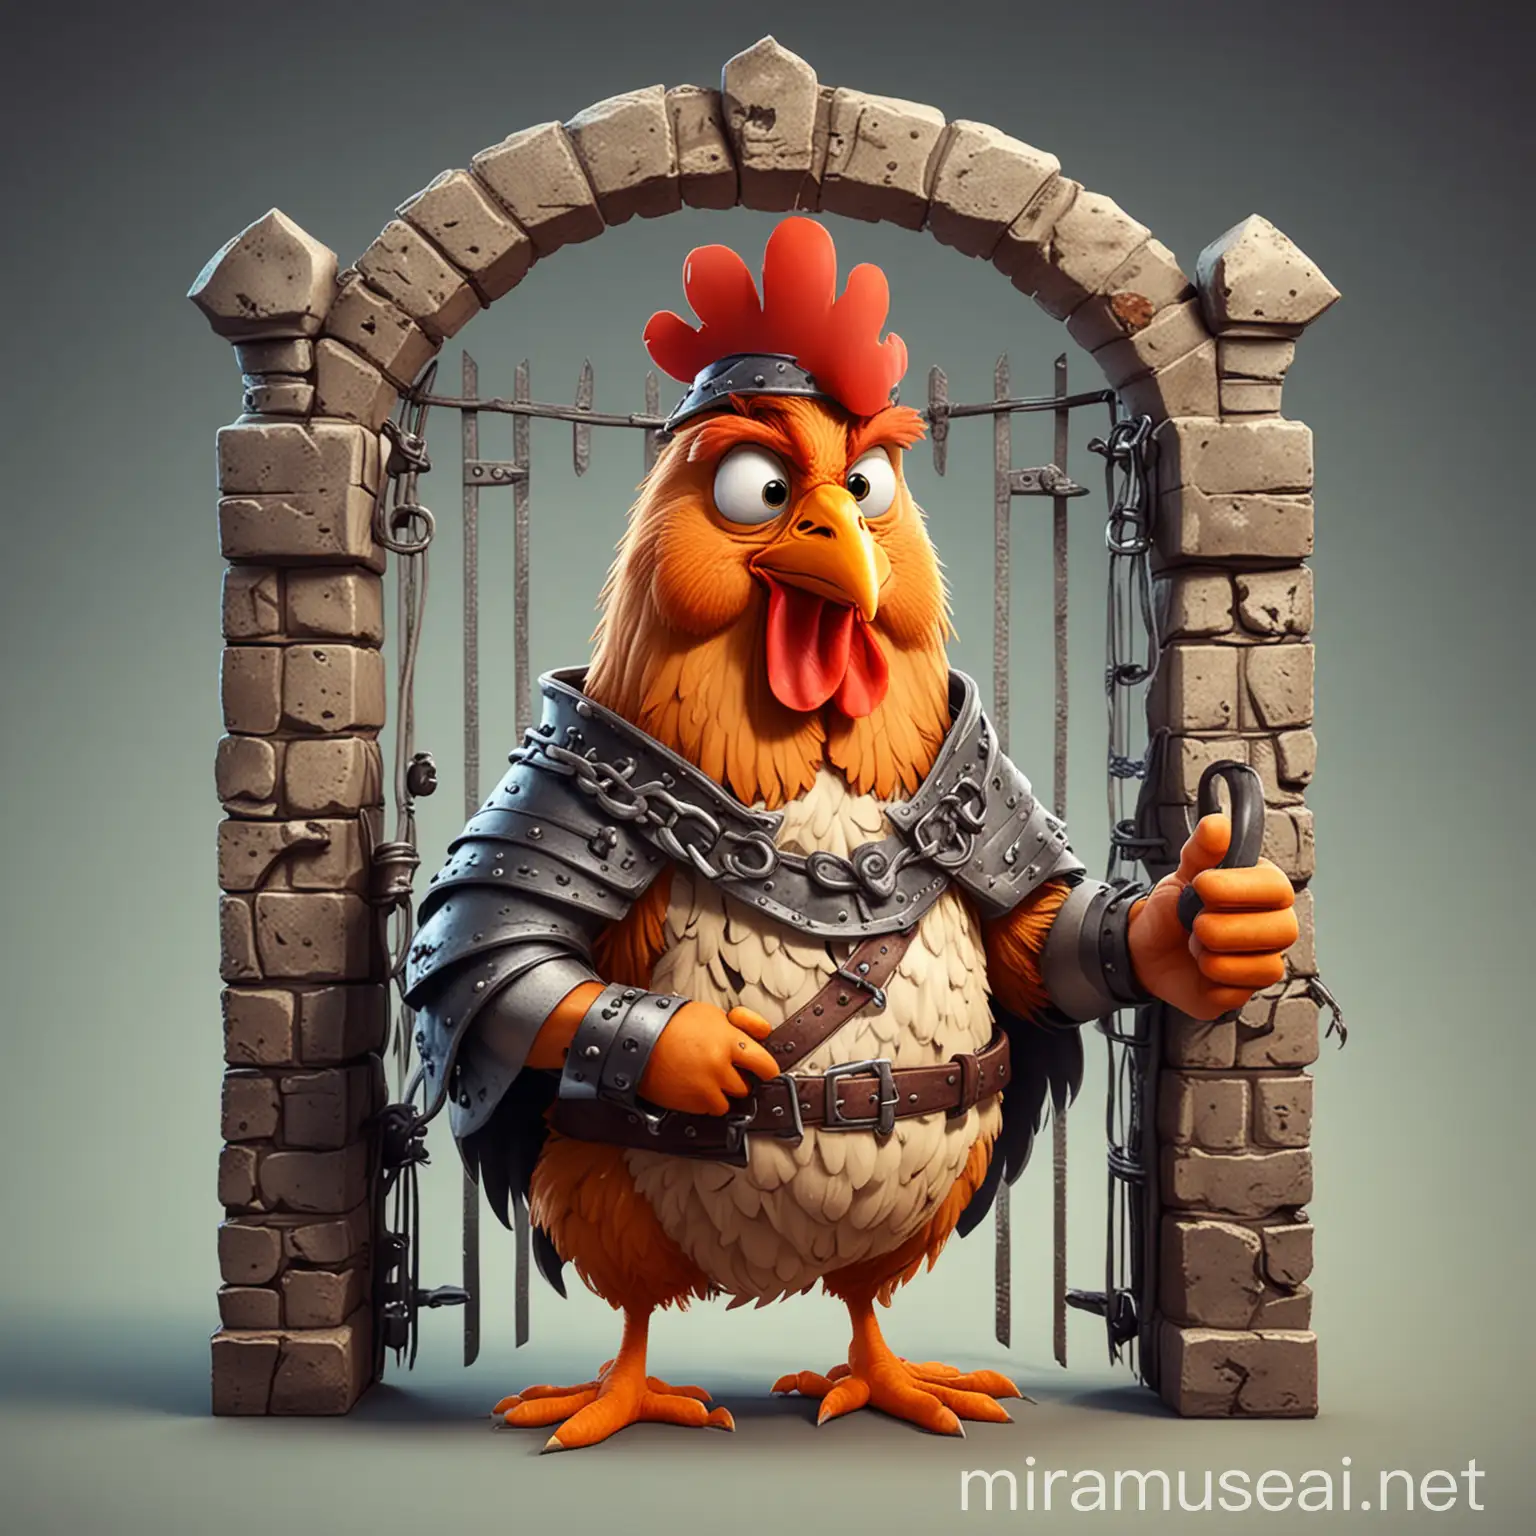 Medieval Cartoon Chicken Prisoner Comical Incarceration Scene